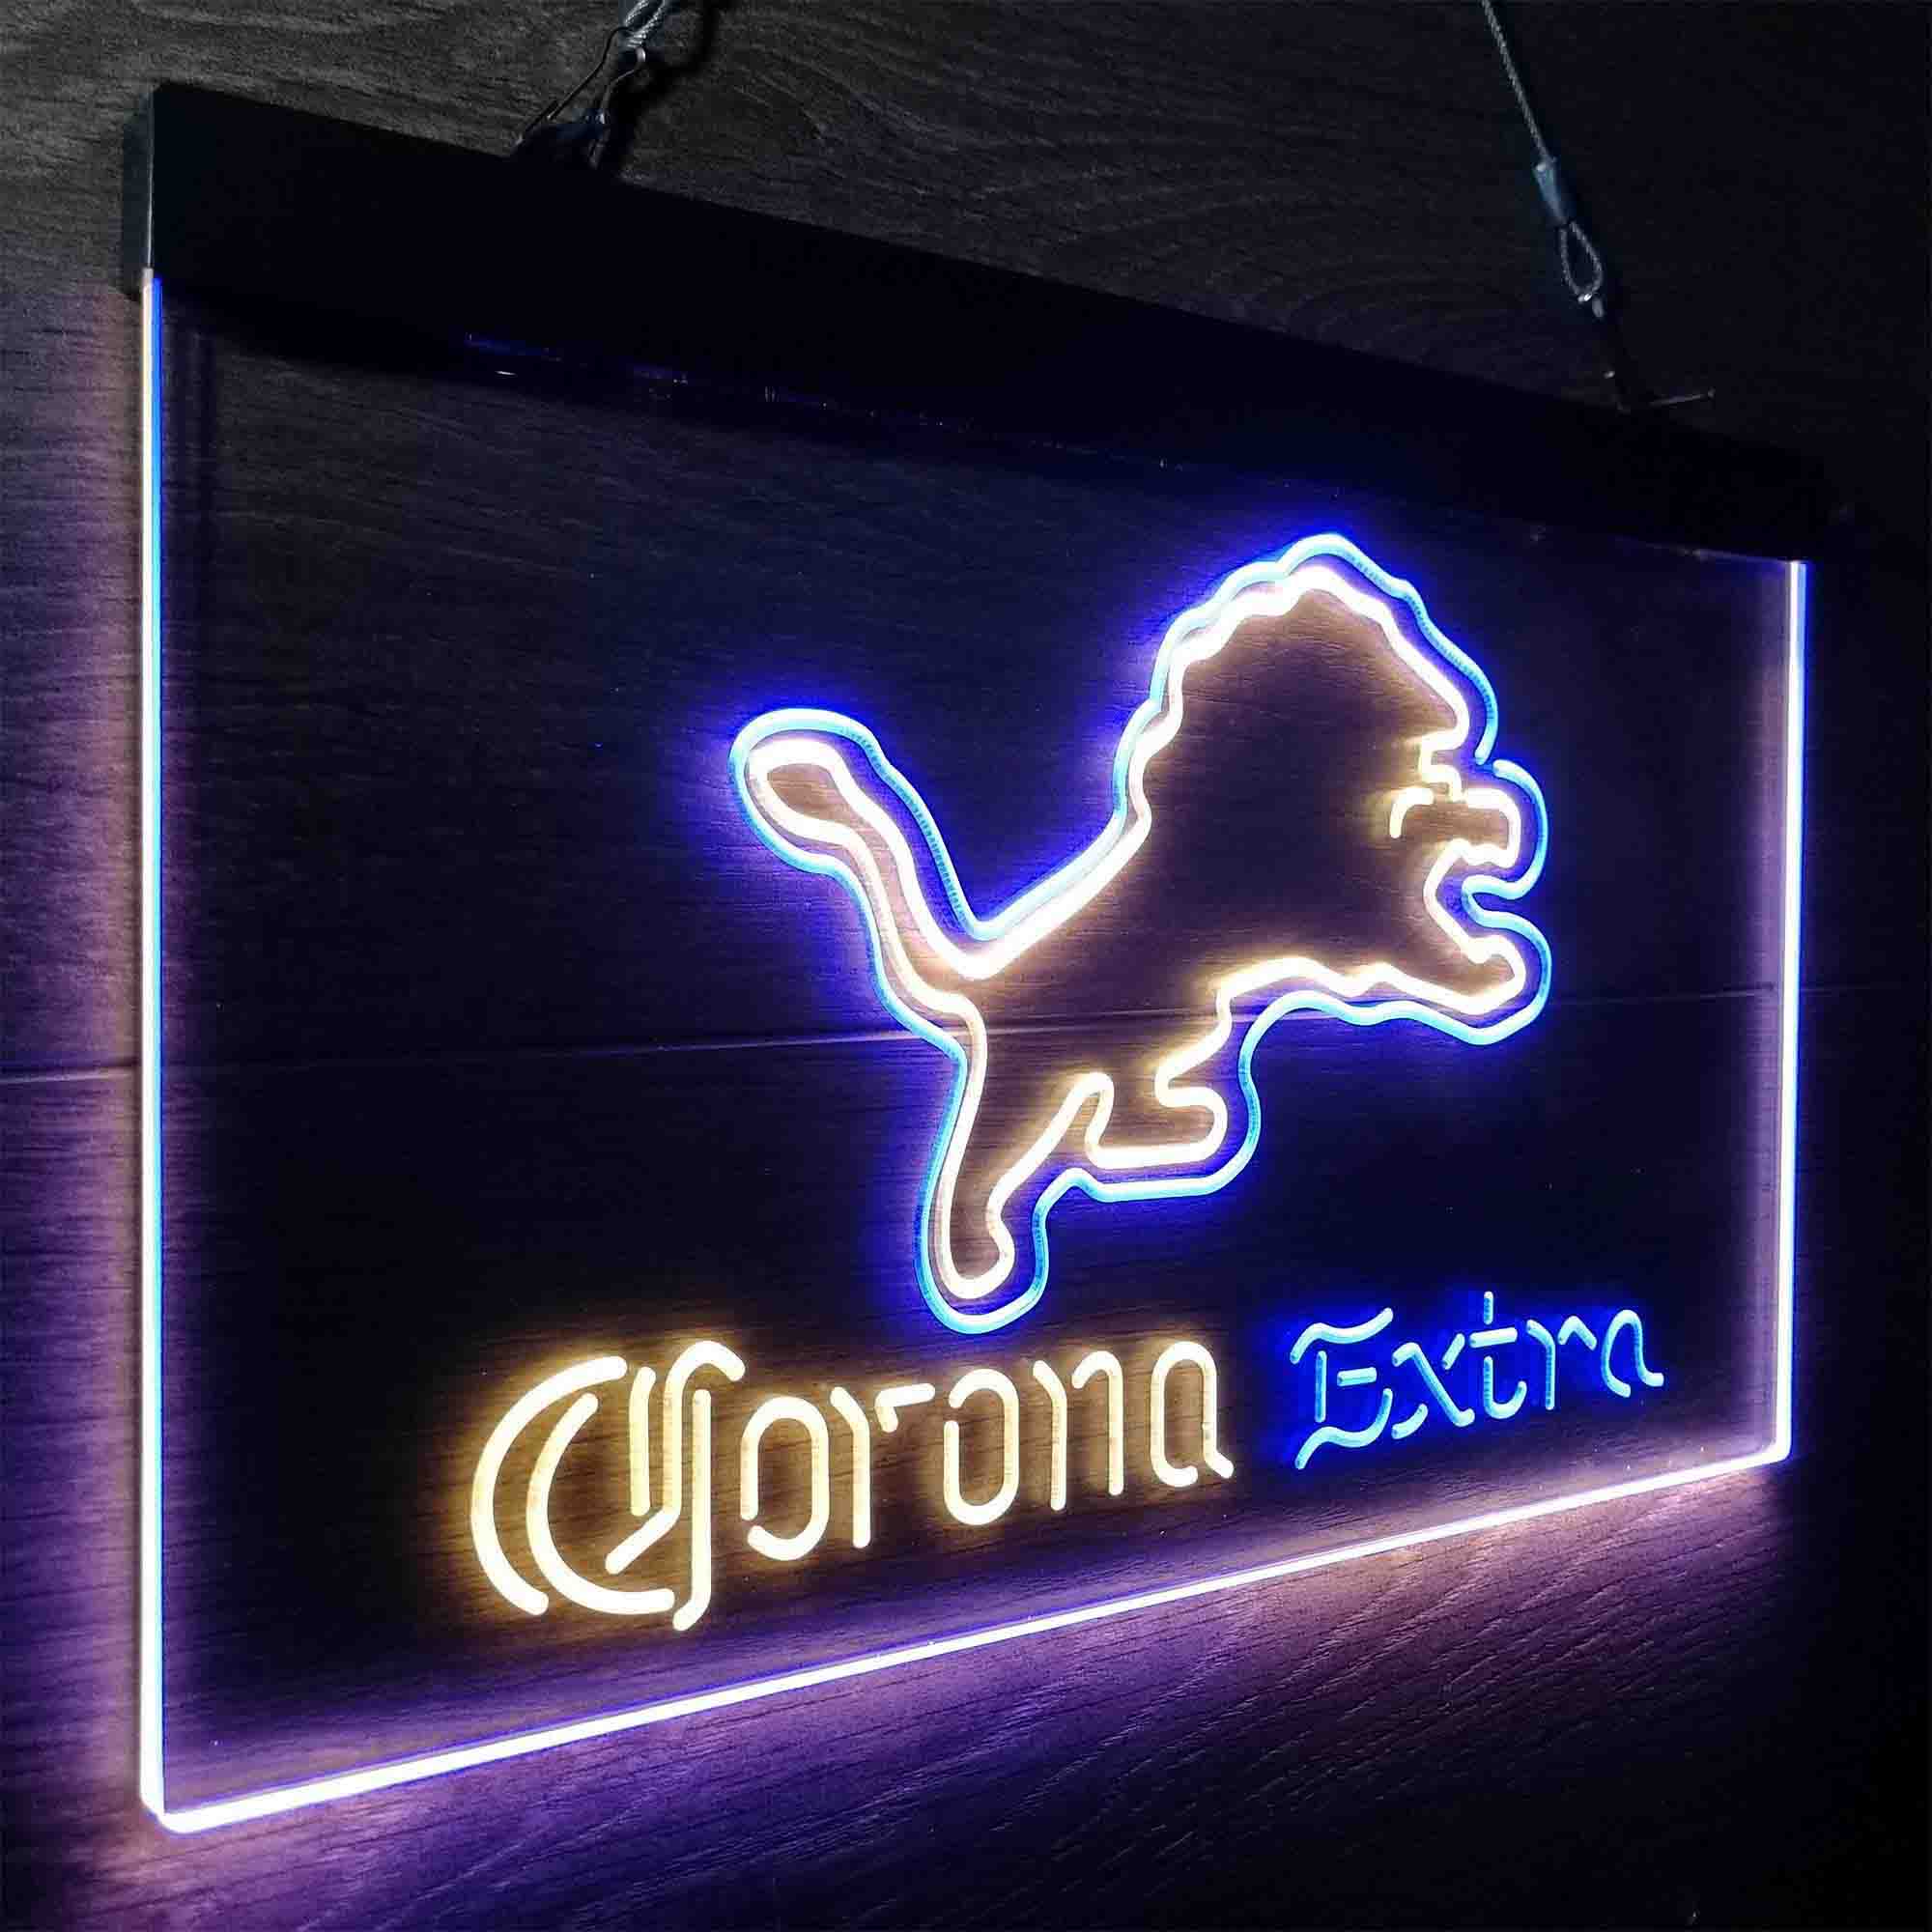 Detroit Lions Corona Extra Bar Neon-Like LED Sign - ProLedSign